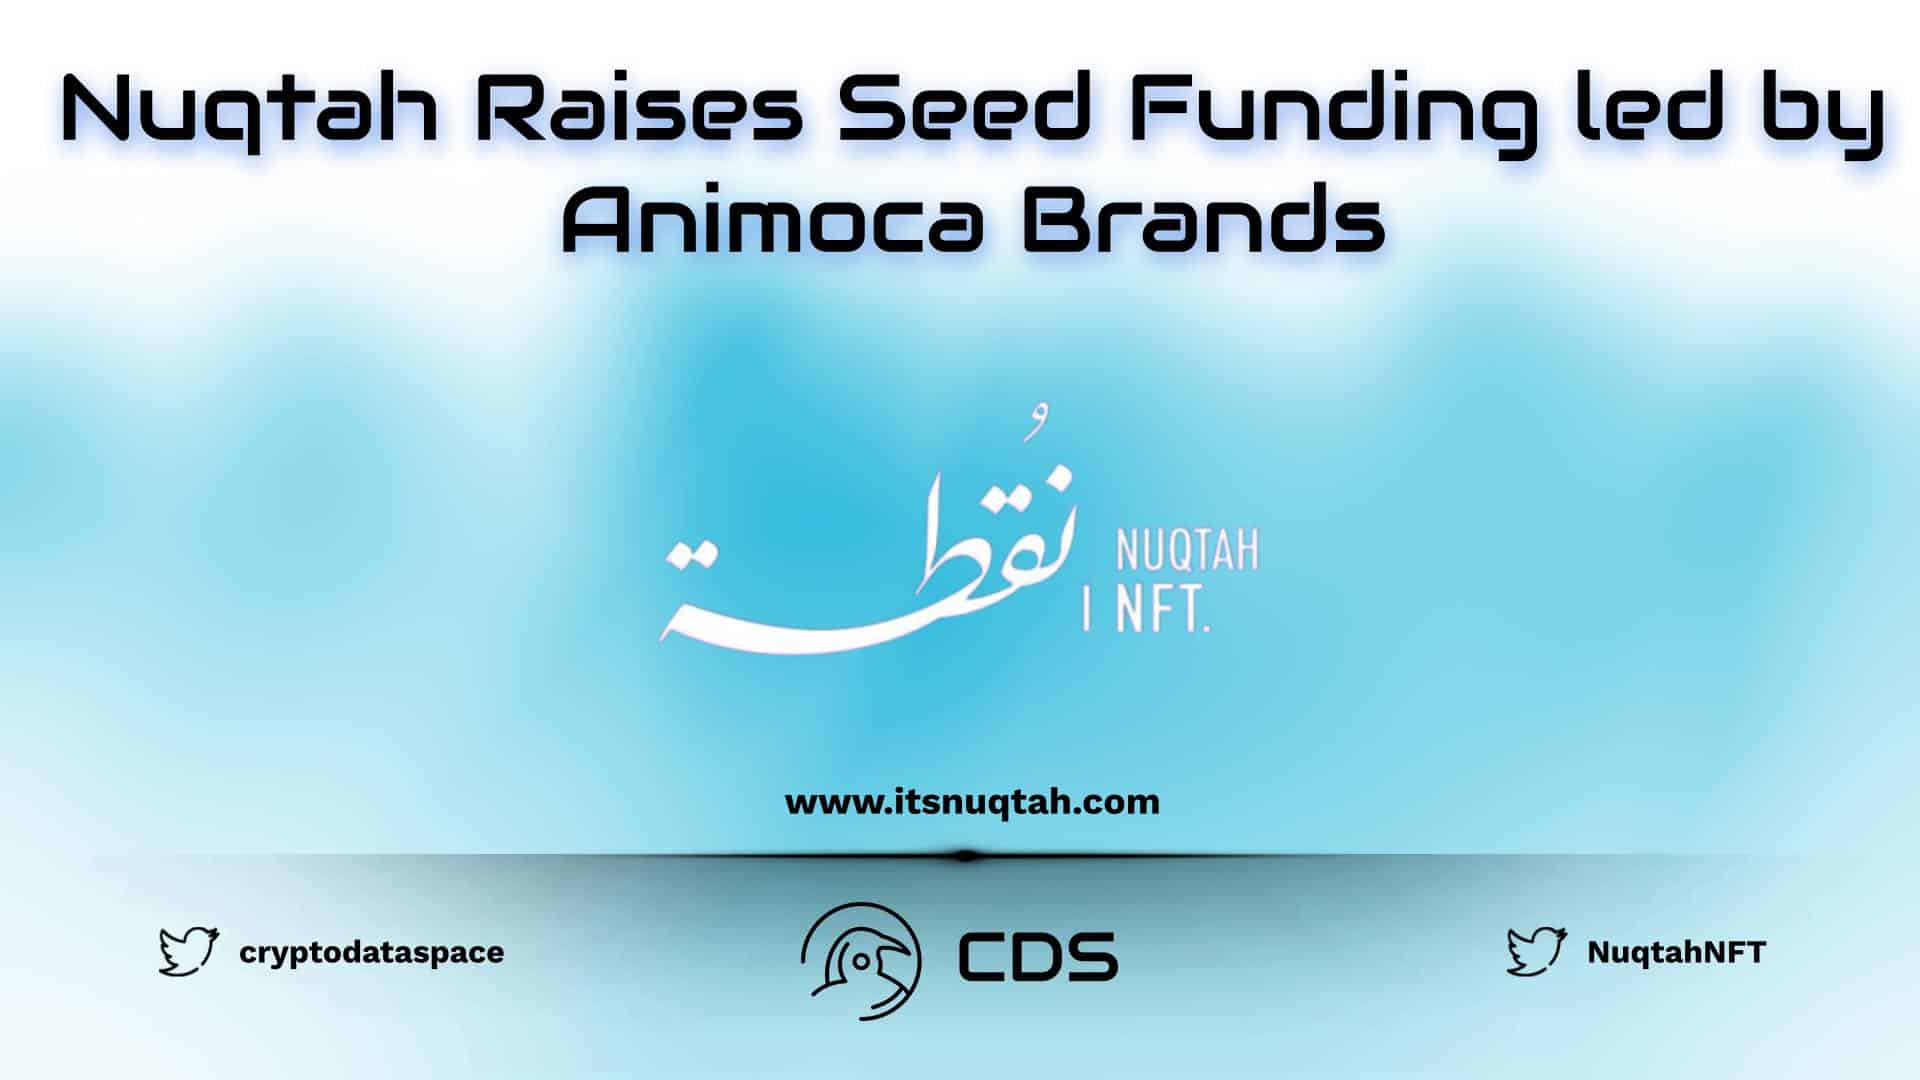 Nuqtah Raises Seed Funding led by Animoca Brands